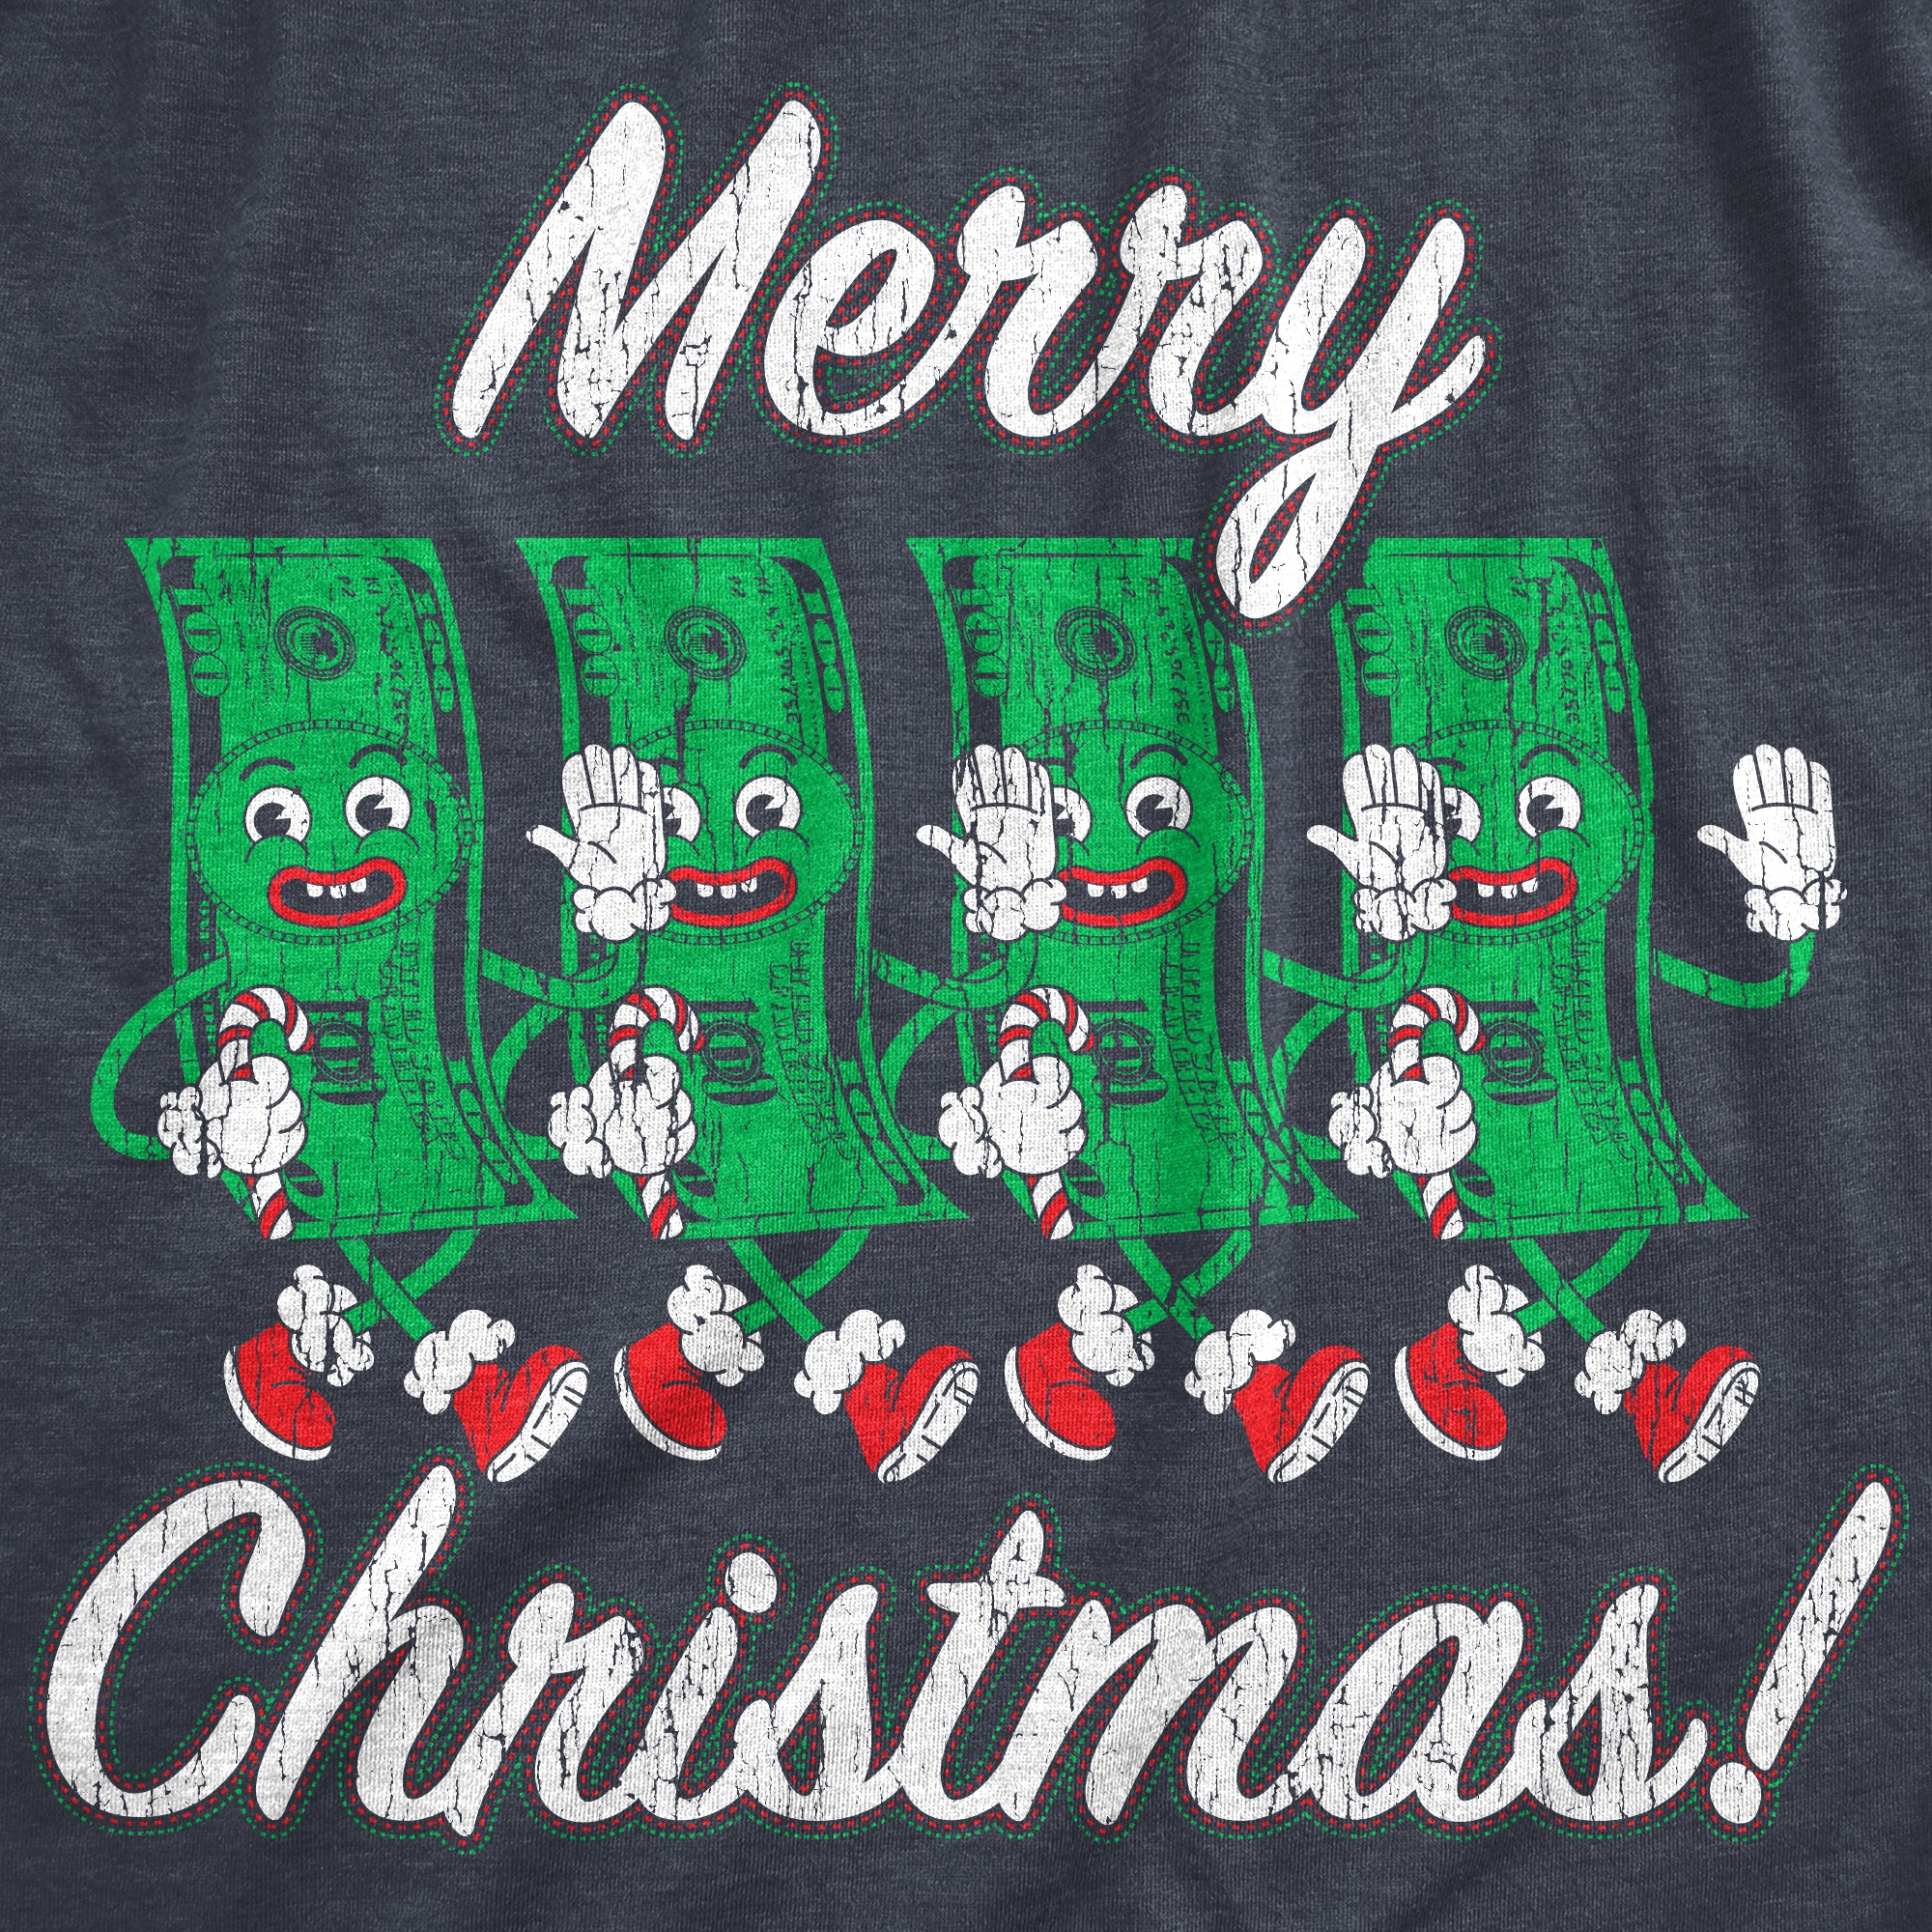 Funny Heather Navy - MONEY Merry Christmas Money Mens T Shirt Nerdy christmas retro Tee